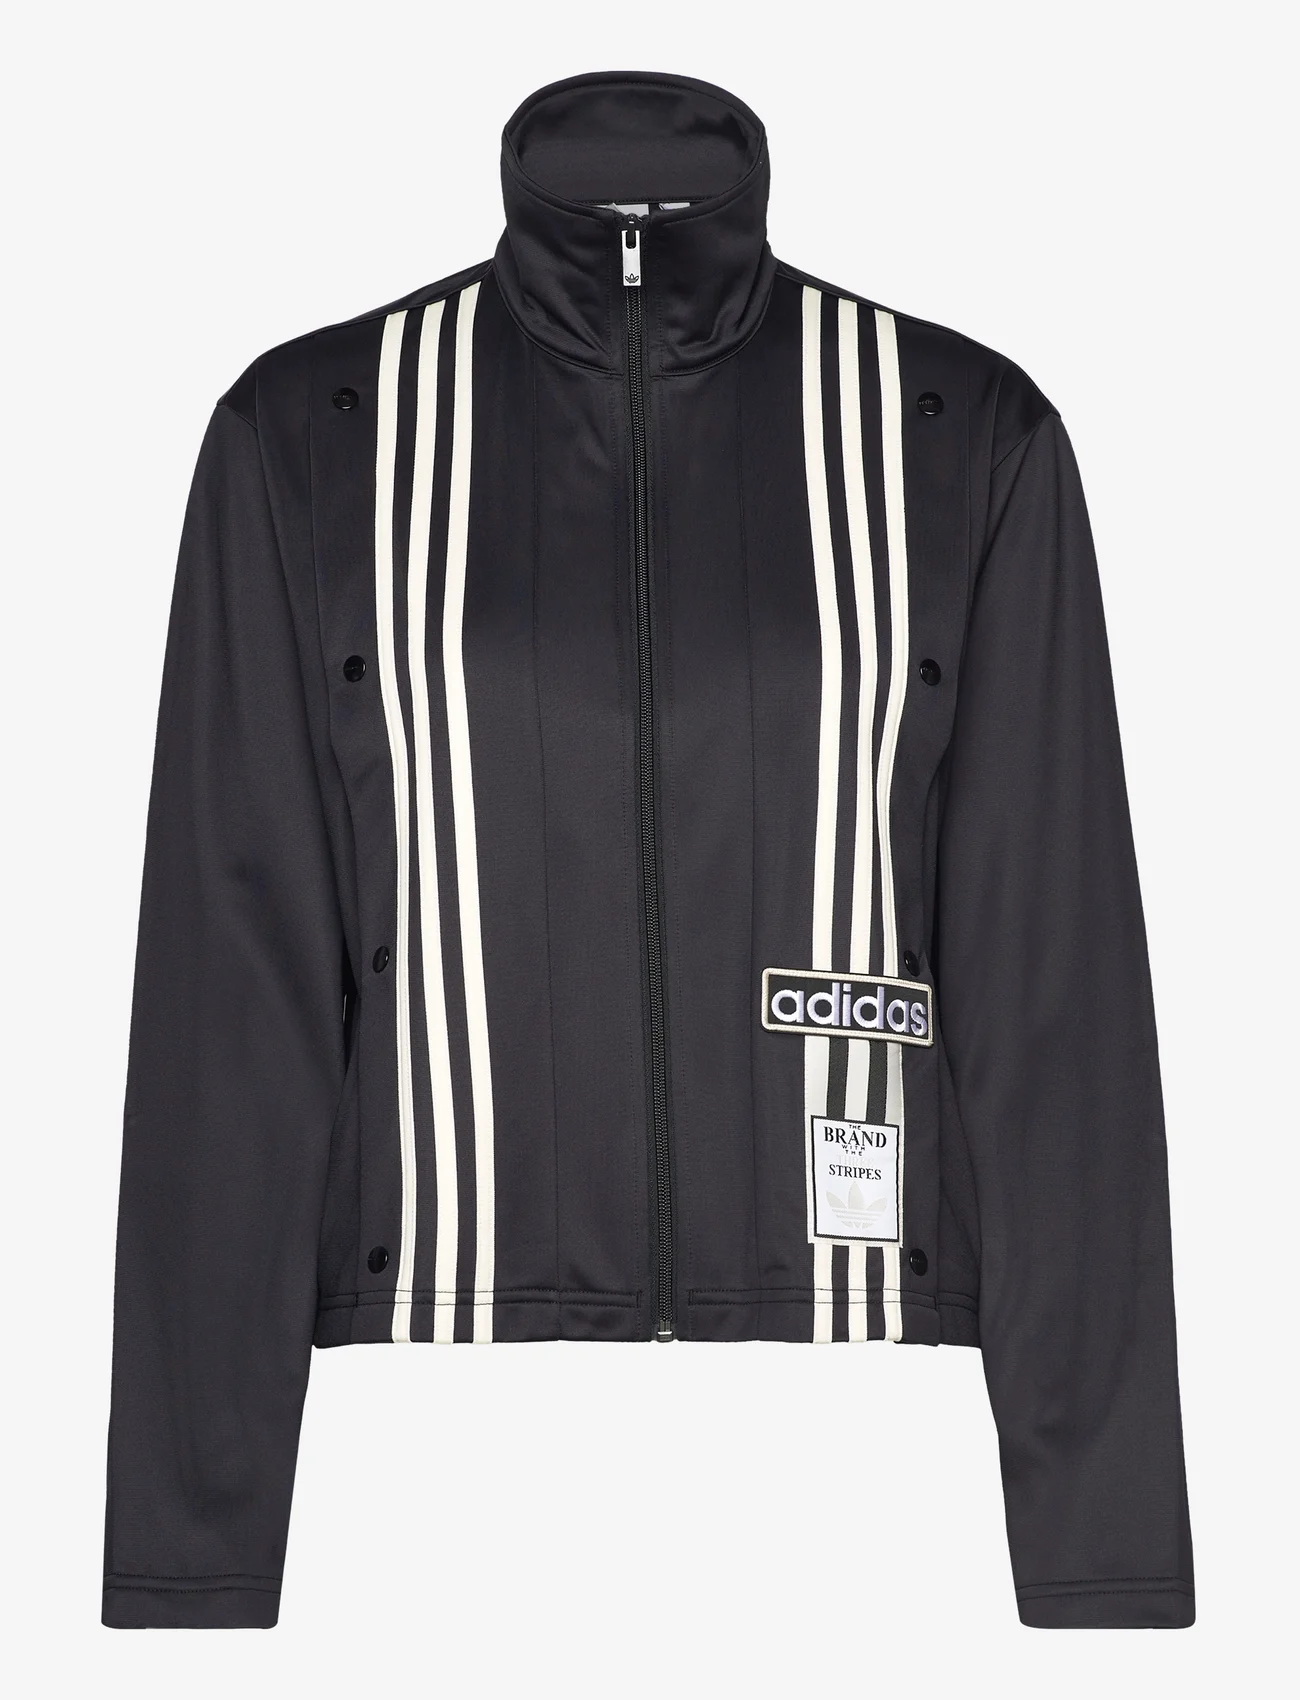 adidas Originals - TRACK TOP - hoodies - black - 0